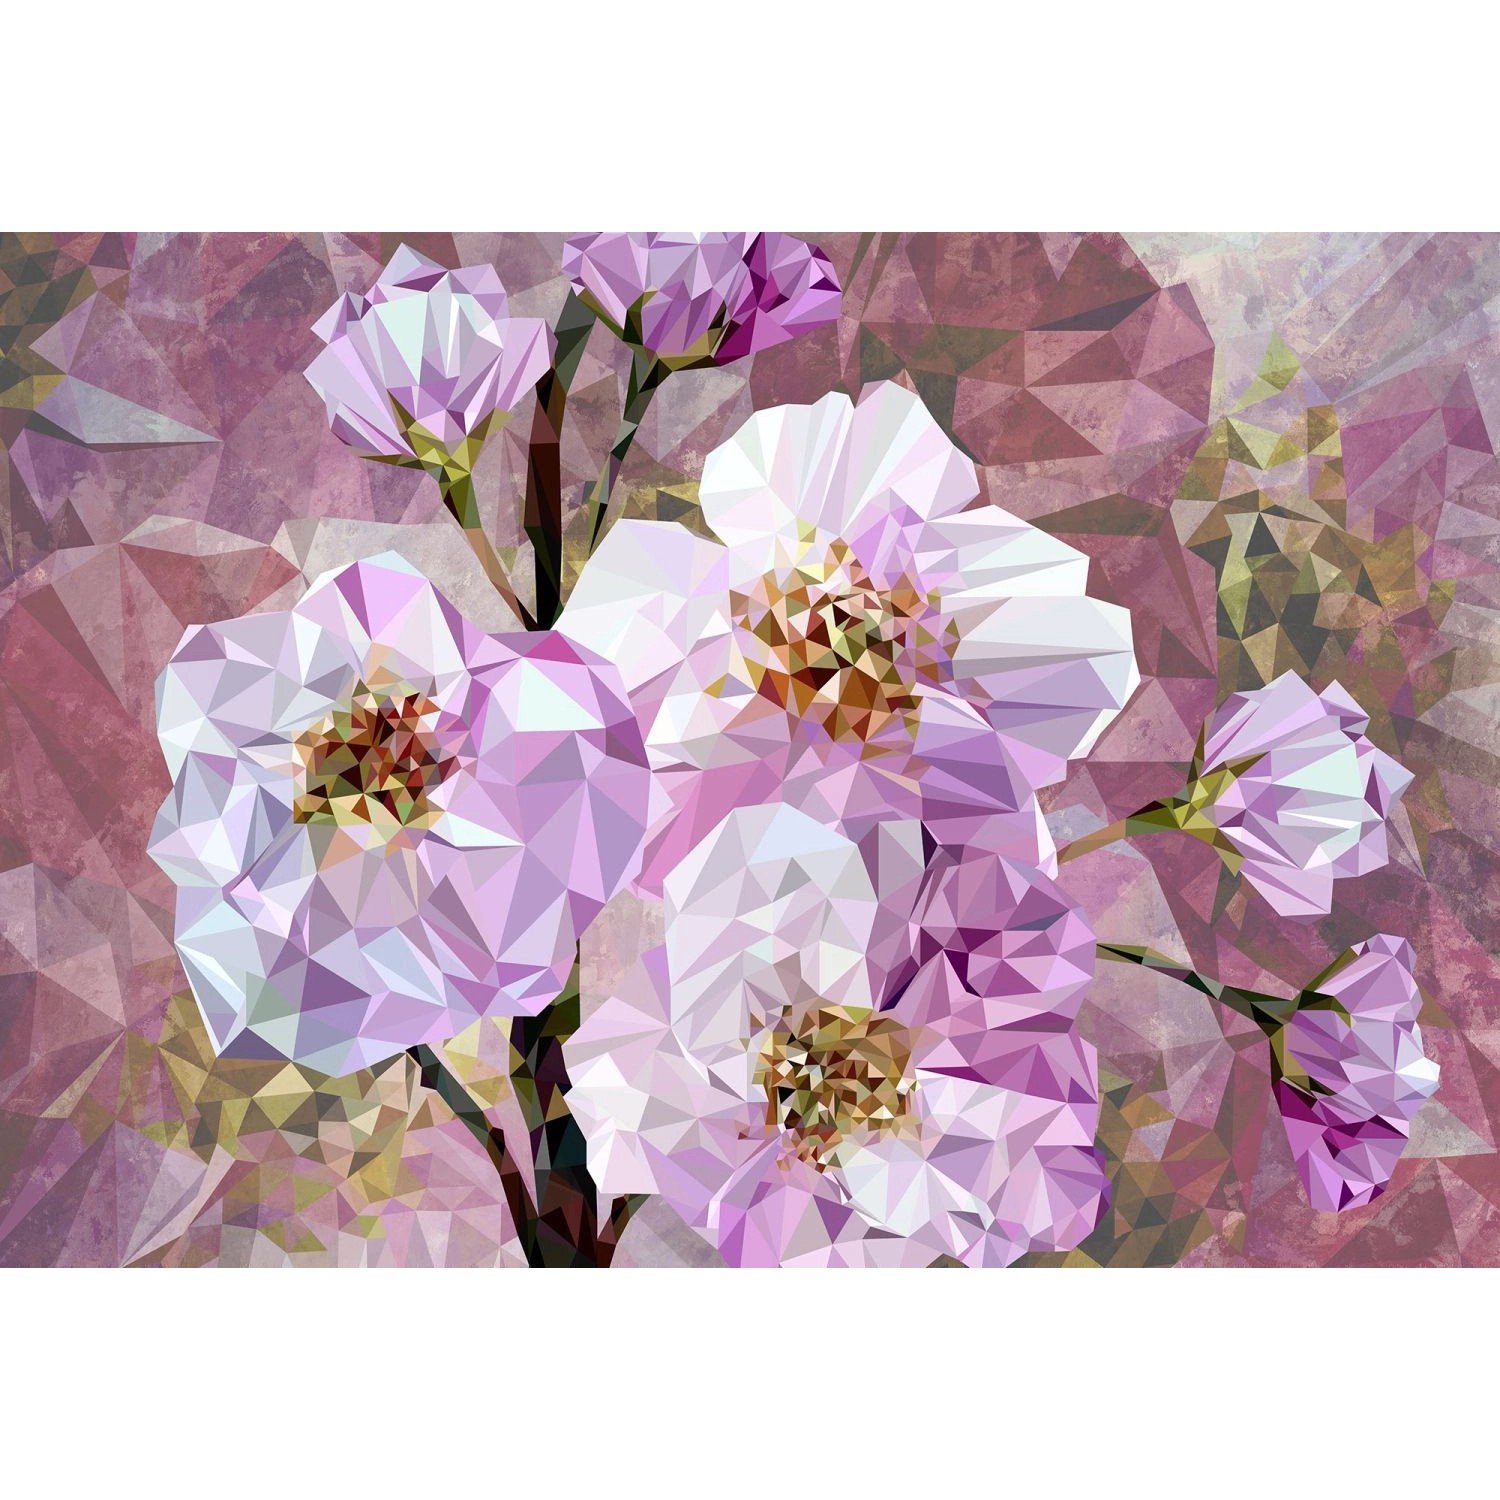 Sanders & Sanders Fototapete Kirschblüten Rosa 368 x 248 cm 612327 günstig online kaufen